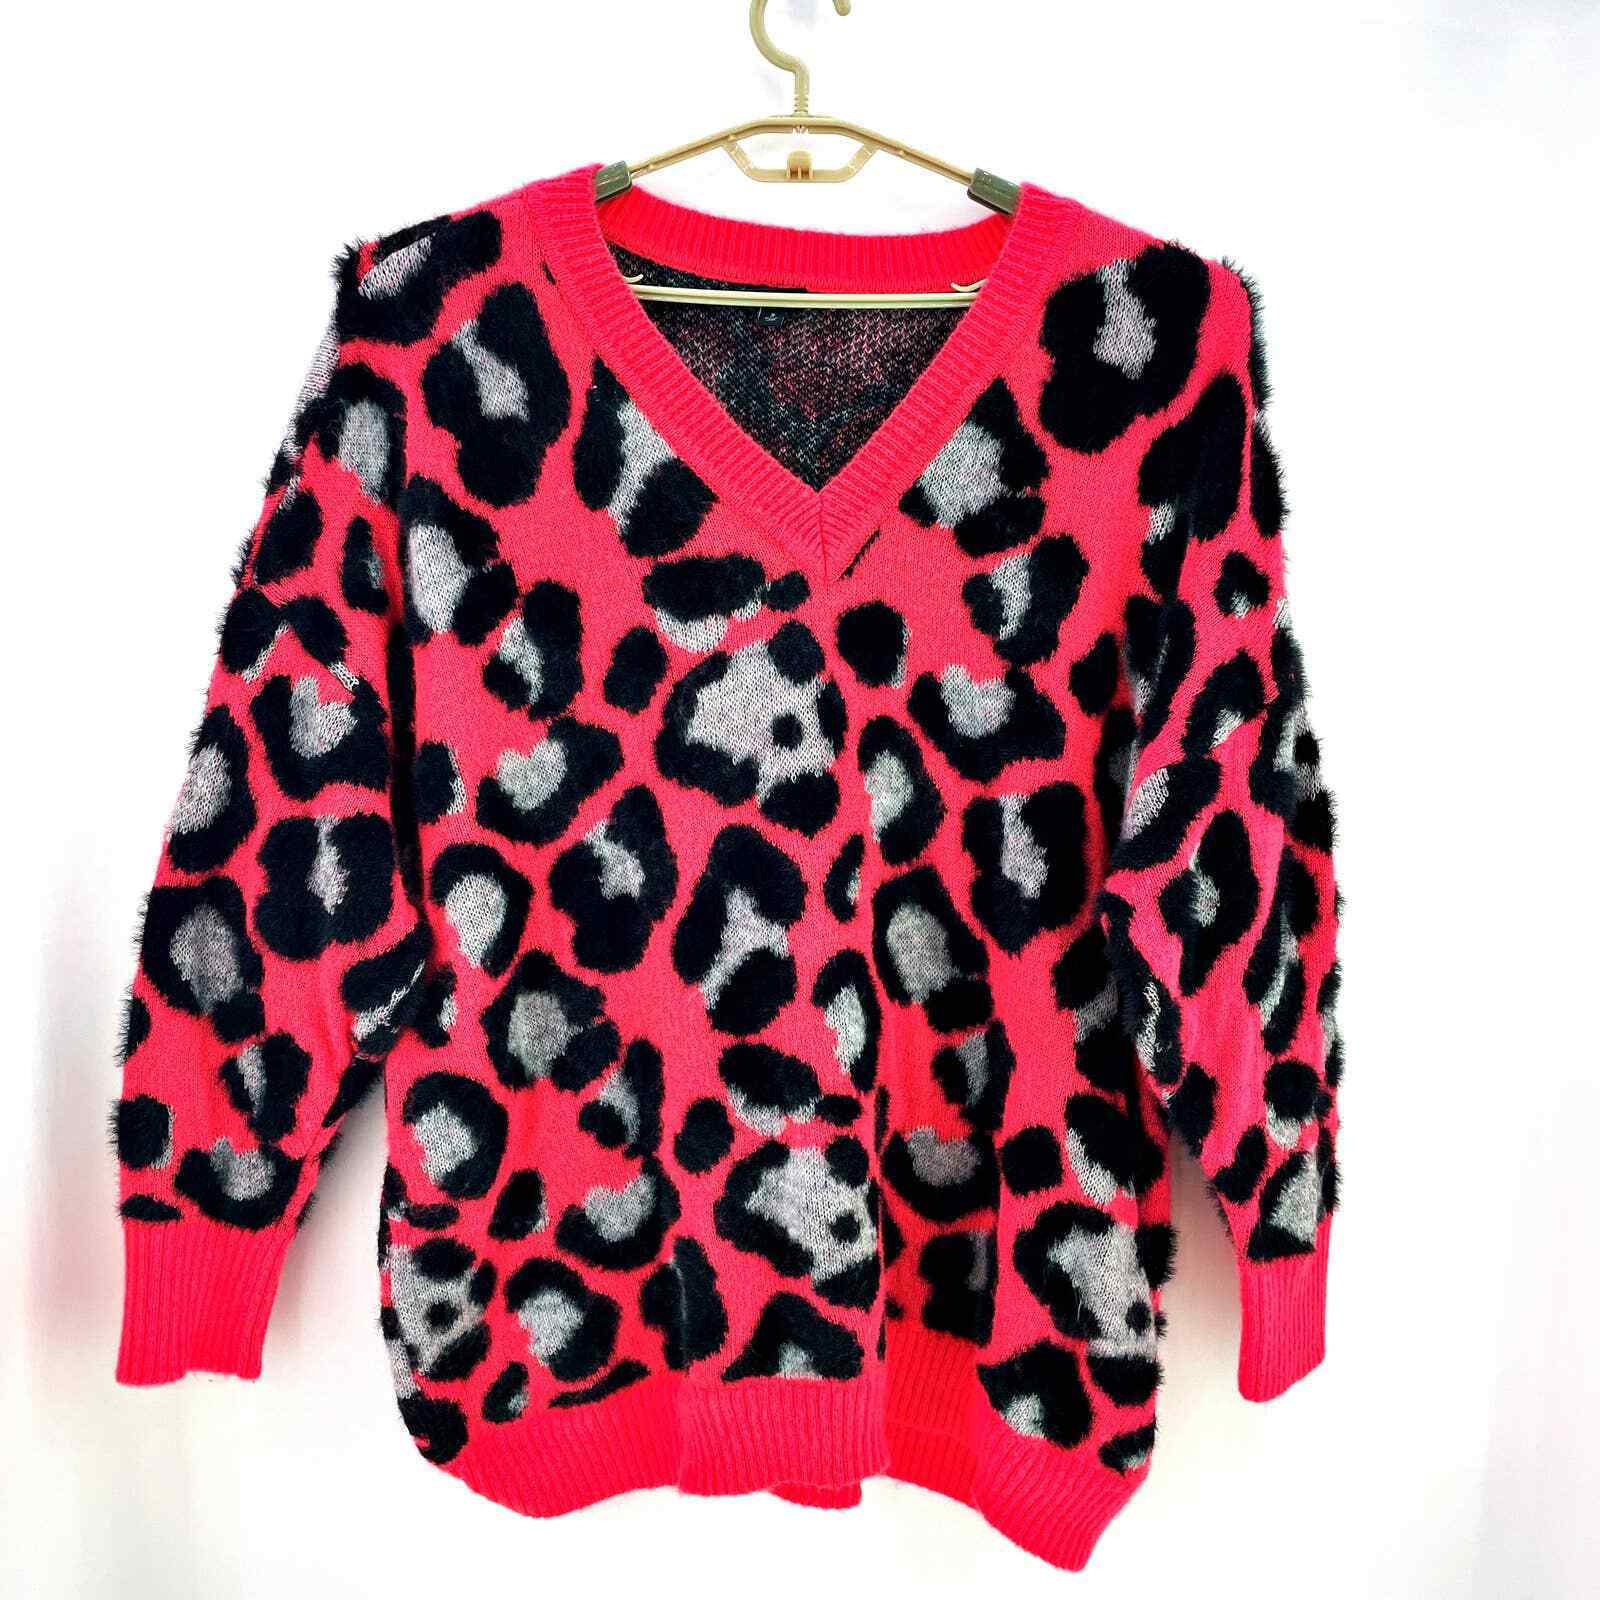 EUC Torrid Women's Bright Coral Pink Leopard Print Fuzzy Sweater 